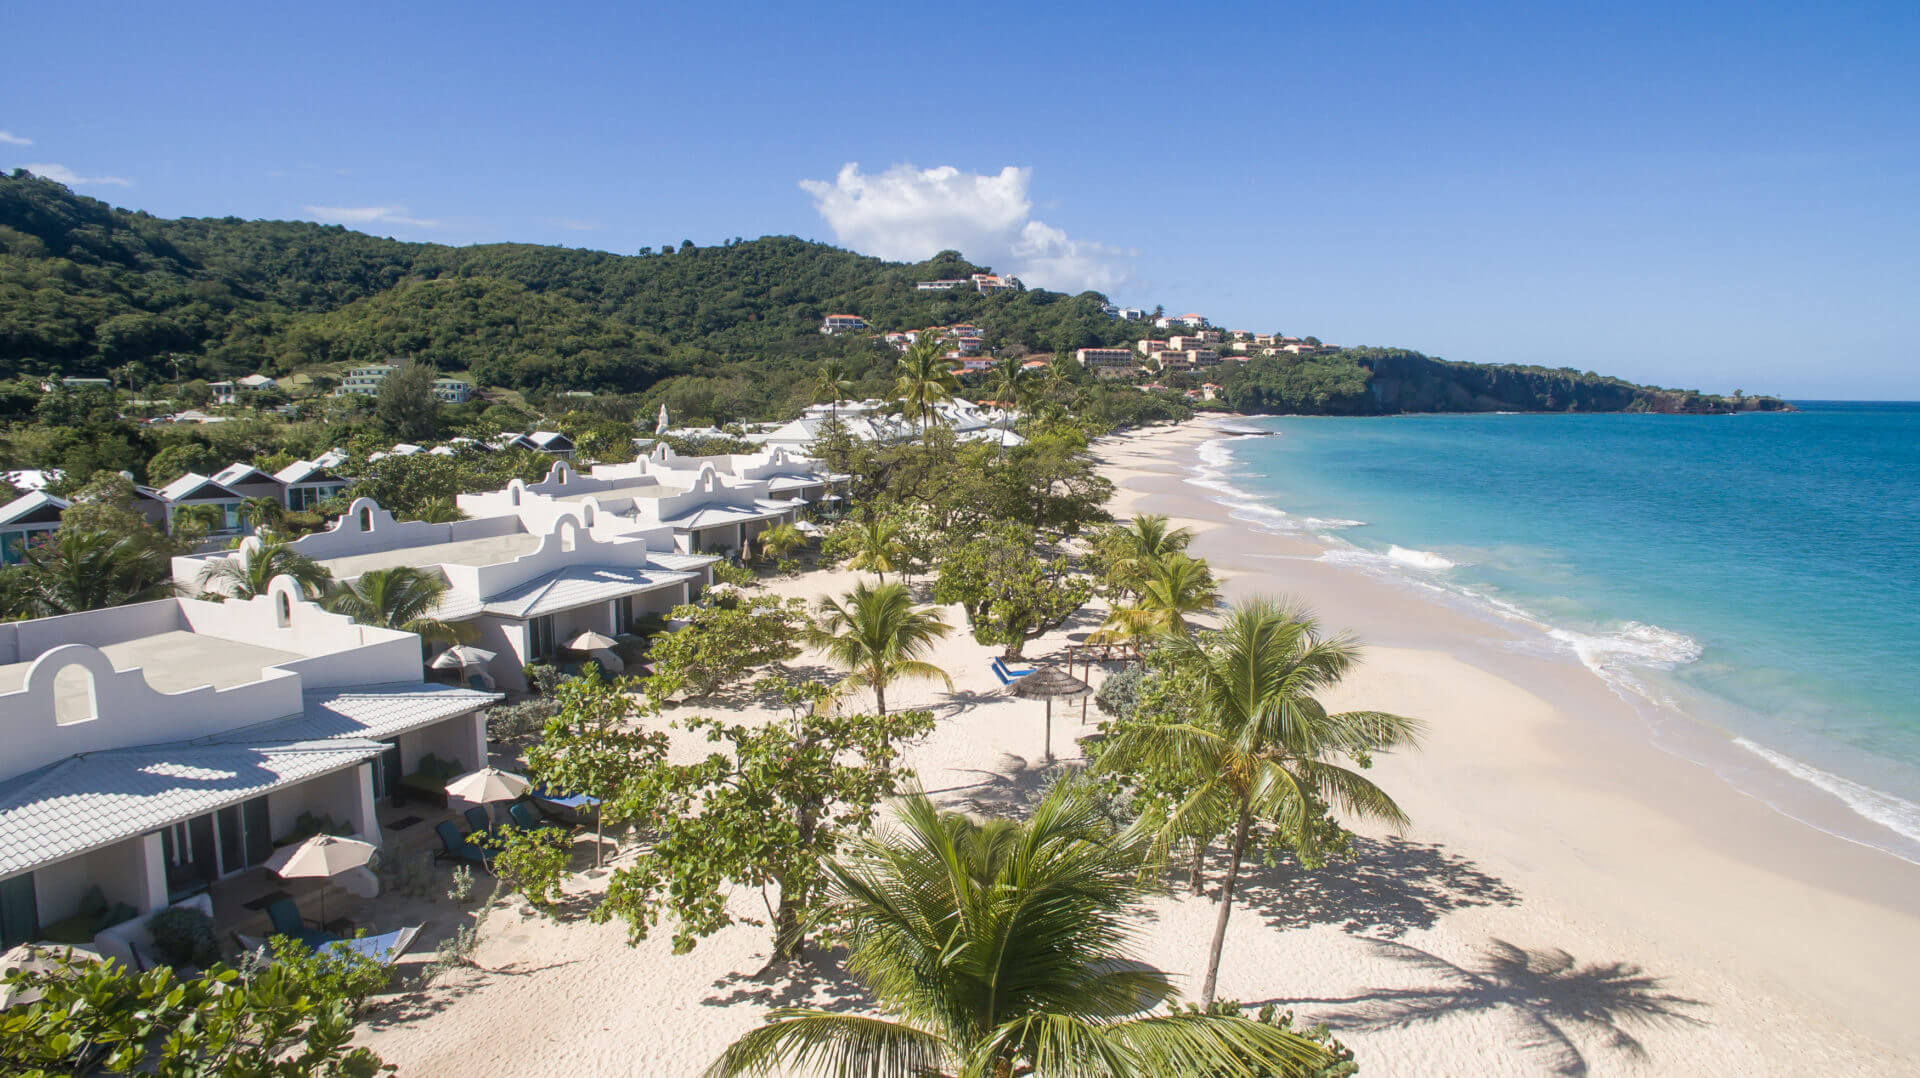 LUXURIA LIFESTYLE'S DANIELLE JACOBSEN REVIEWS THE STUNNING Spice Island Beach Resort IN Grenada